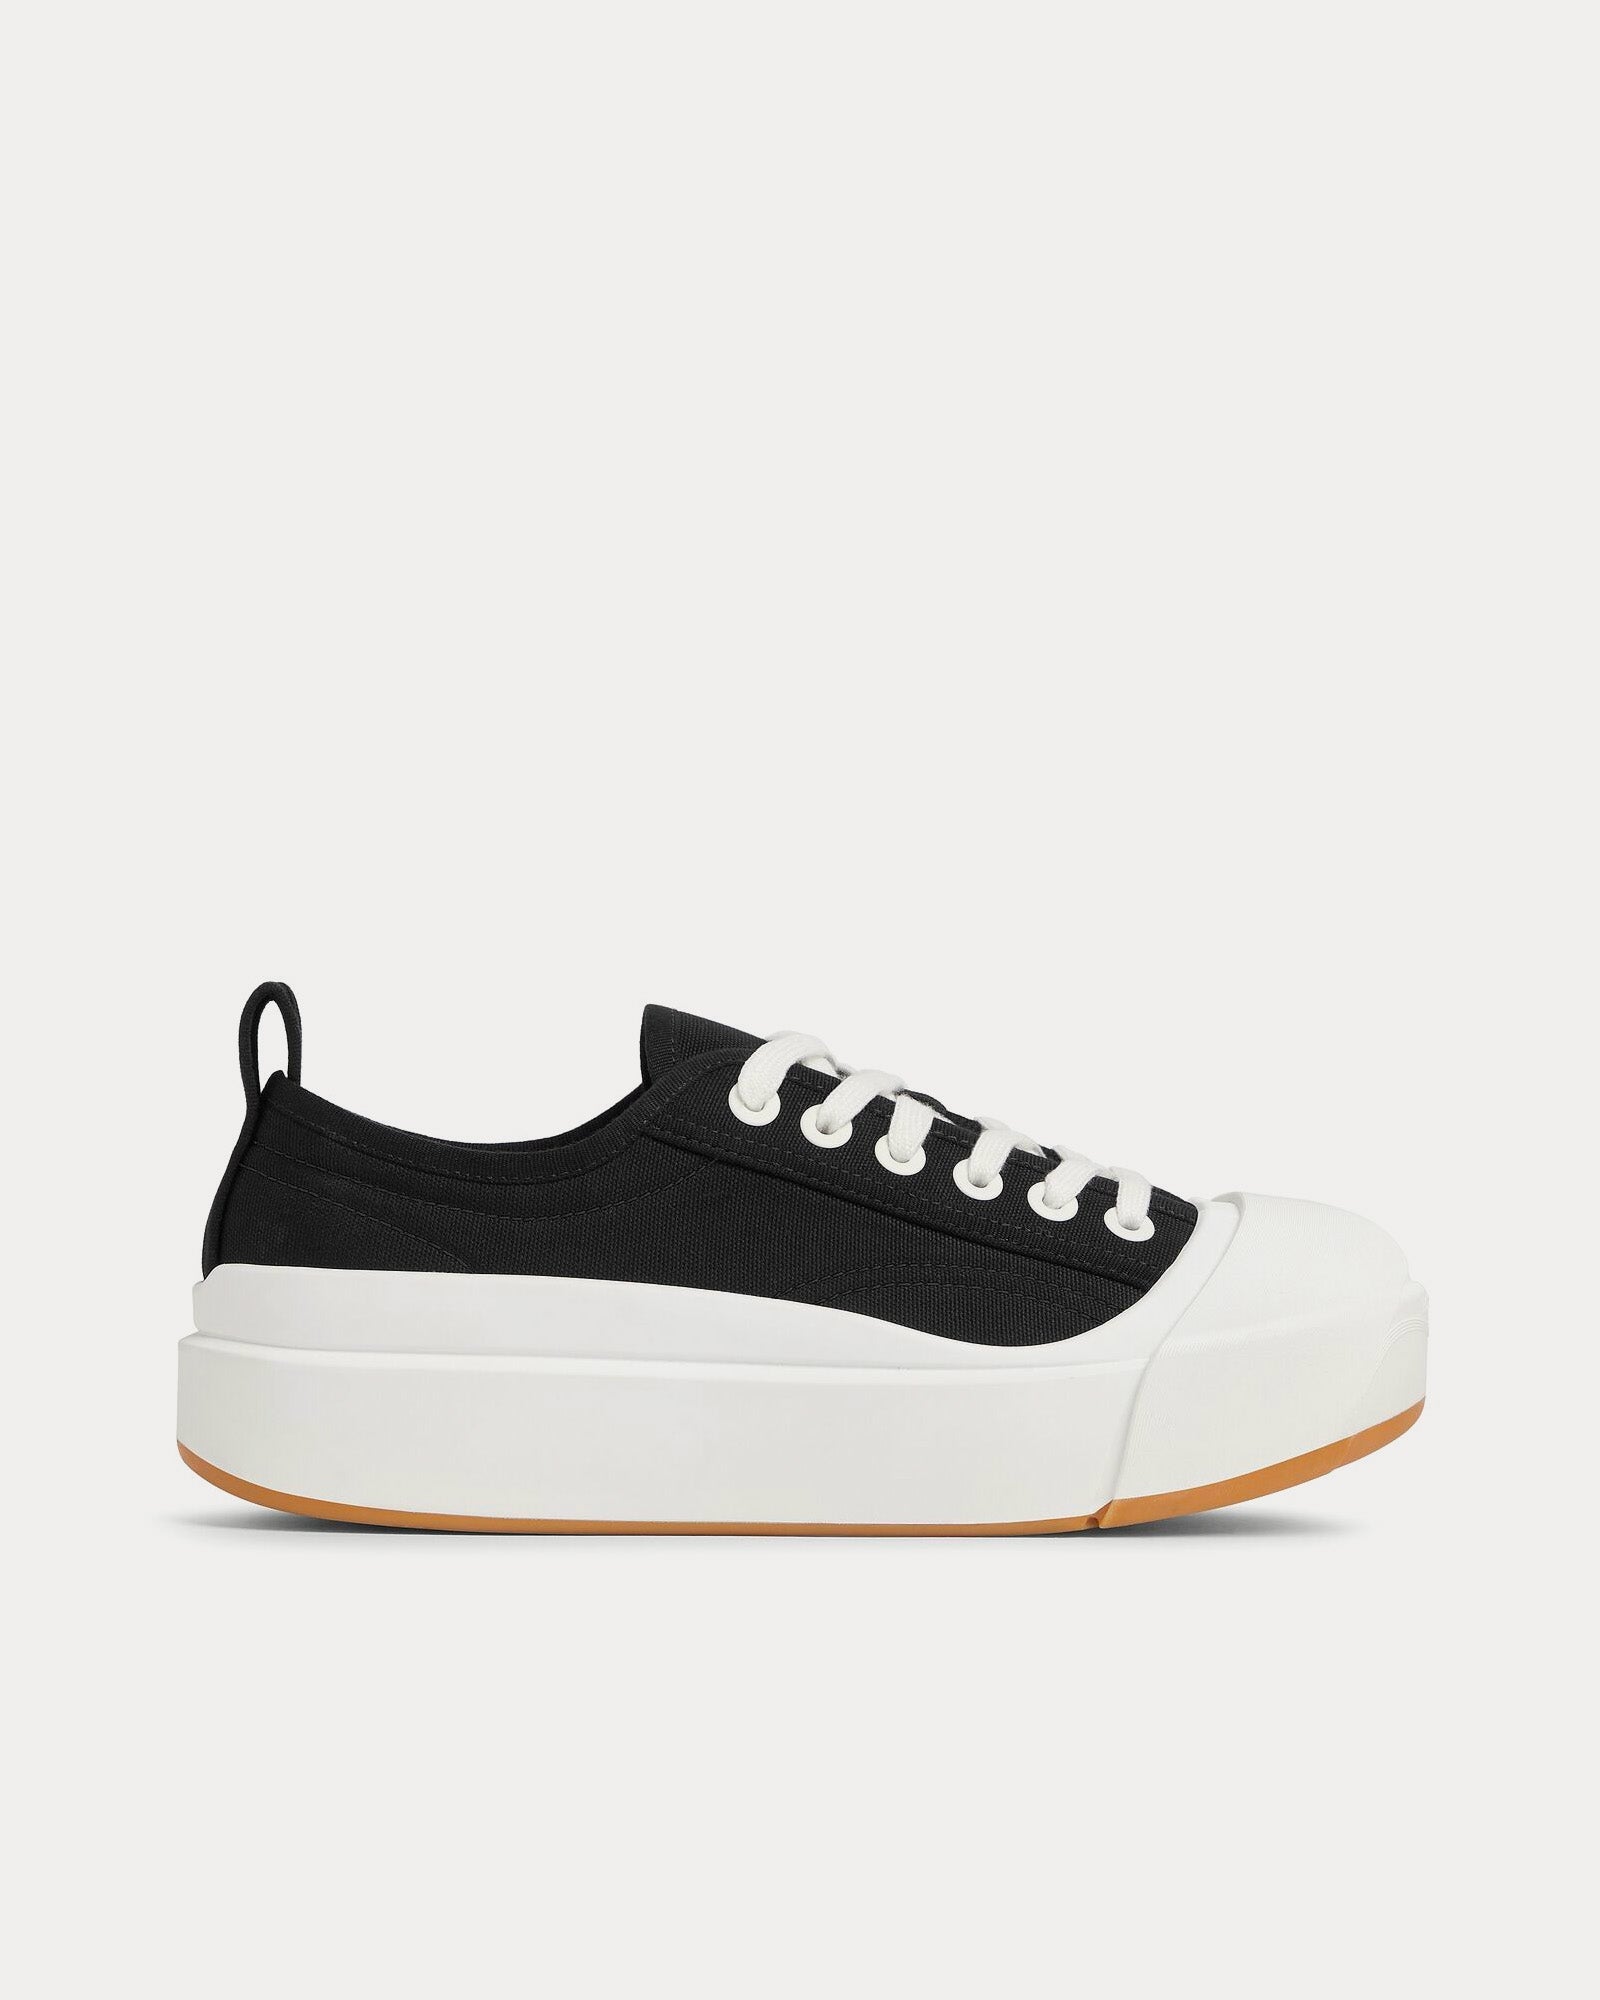 Bottega Veneta - Vulcan Platform Canvas Black / White Low Top Sneakers